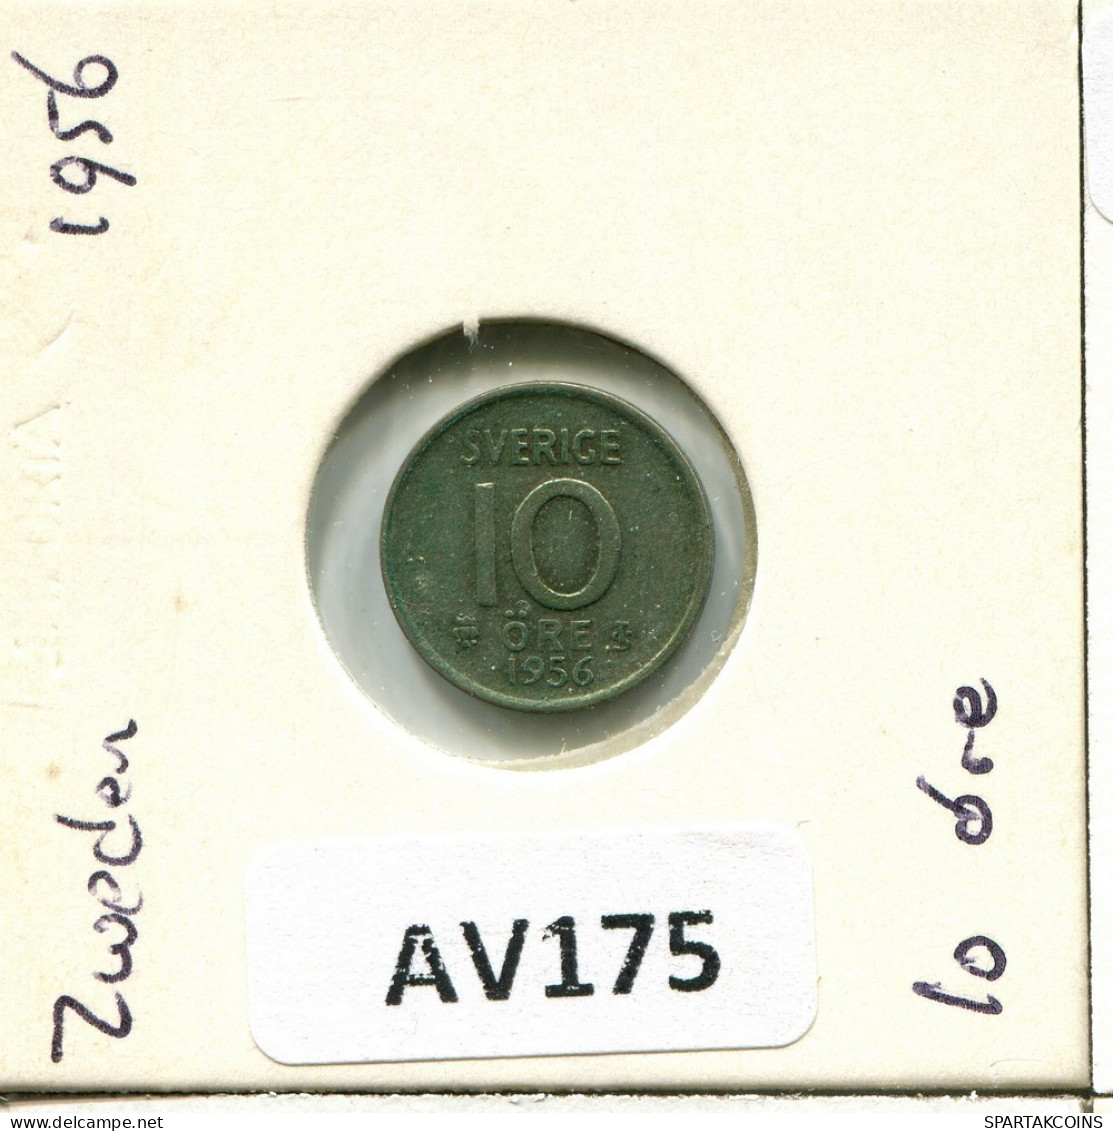 10 ORE 1956 SWEDEN Coin #AV175.U.A - Sweden